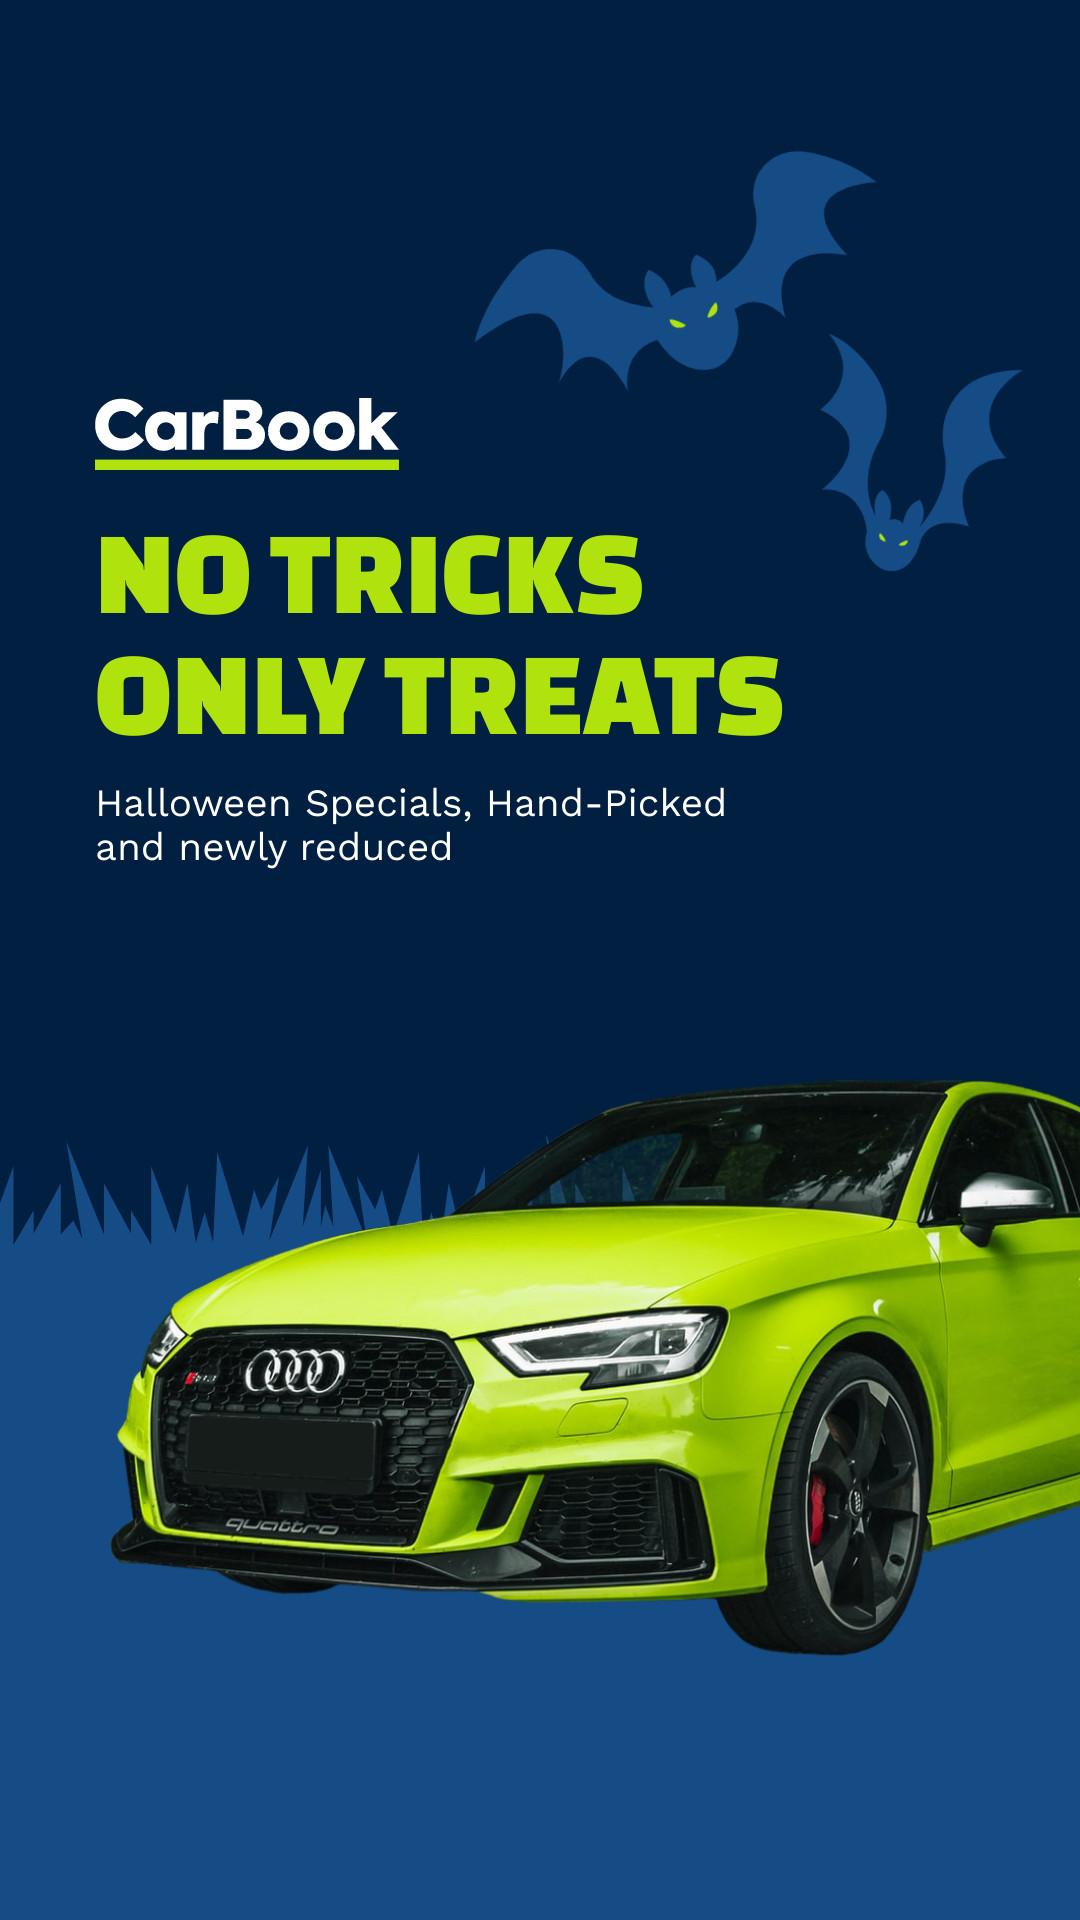 Halloween No Tricks Car Deals 